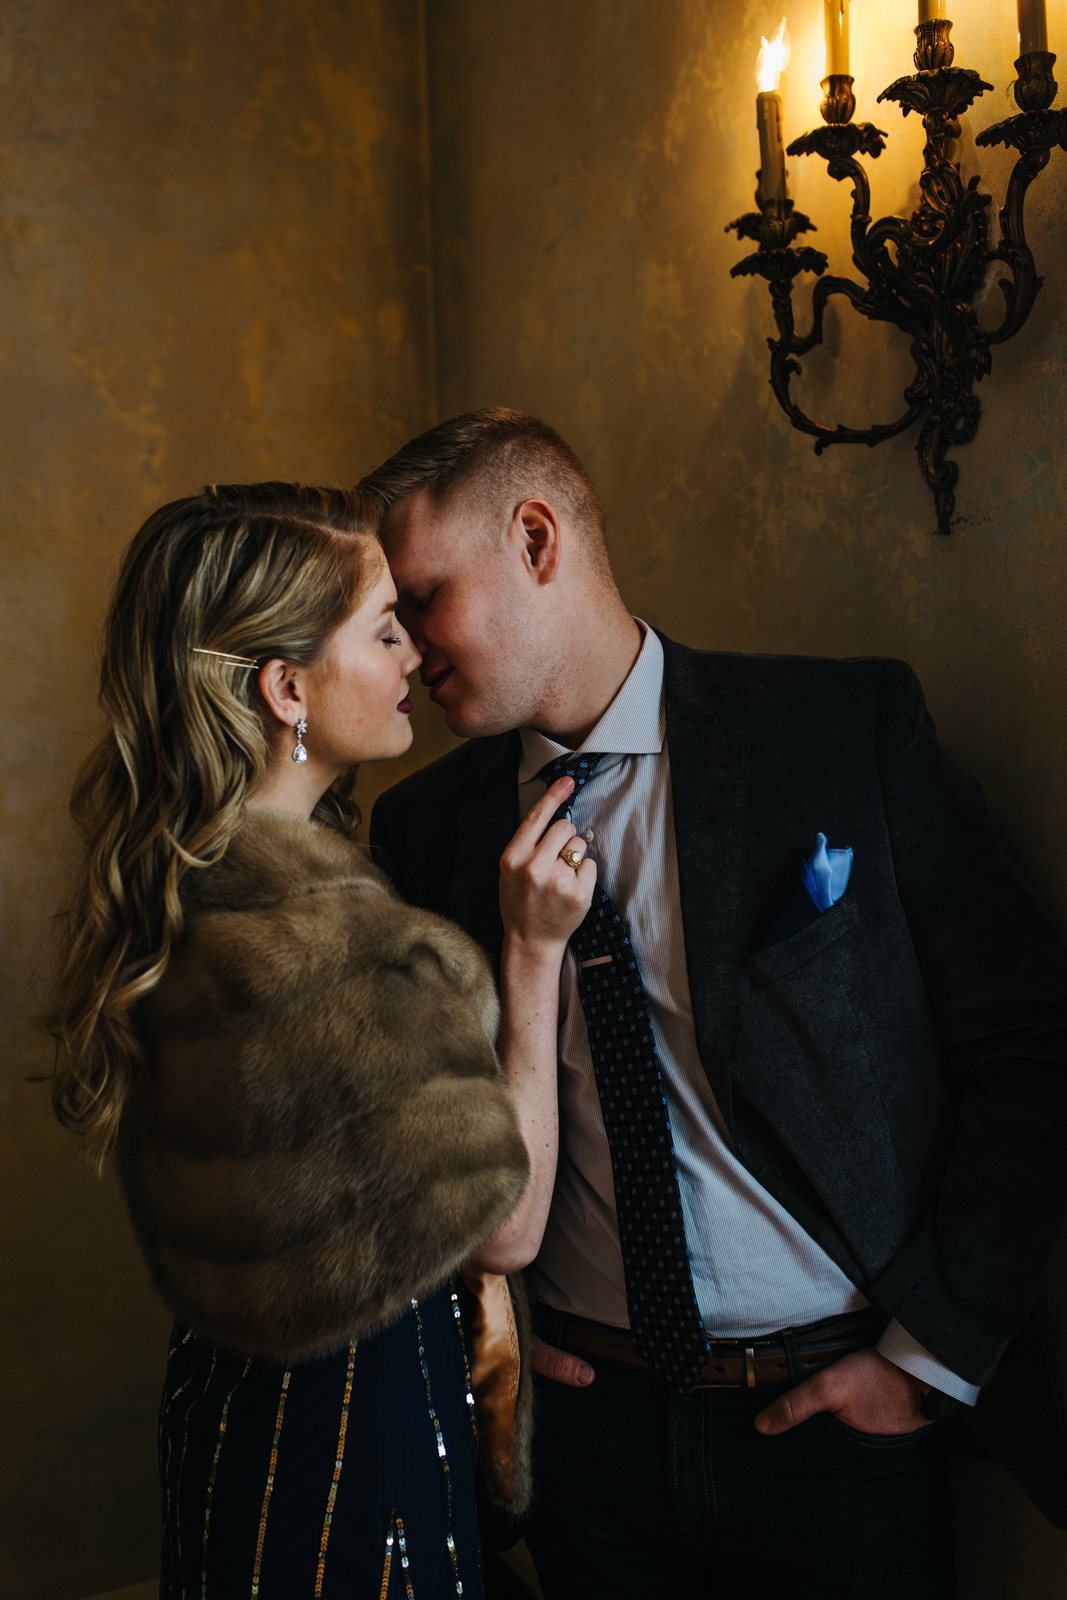 Nashville TN Wedding Photographer Laura K. Allen | 2017 Best of Weddings, Engagements, and Portraits 